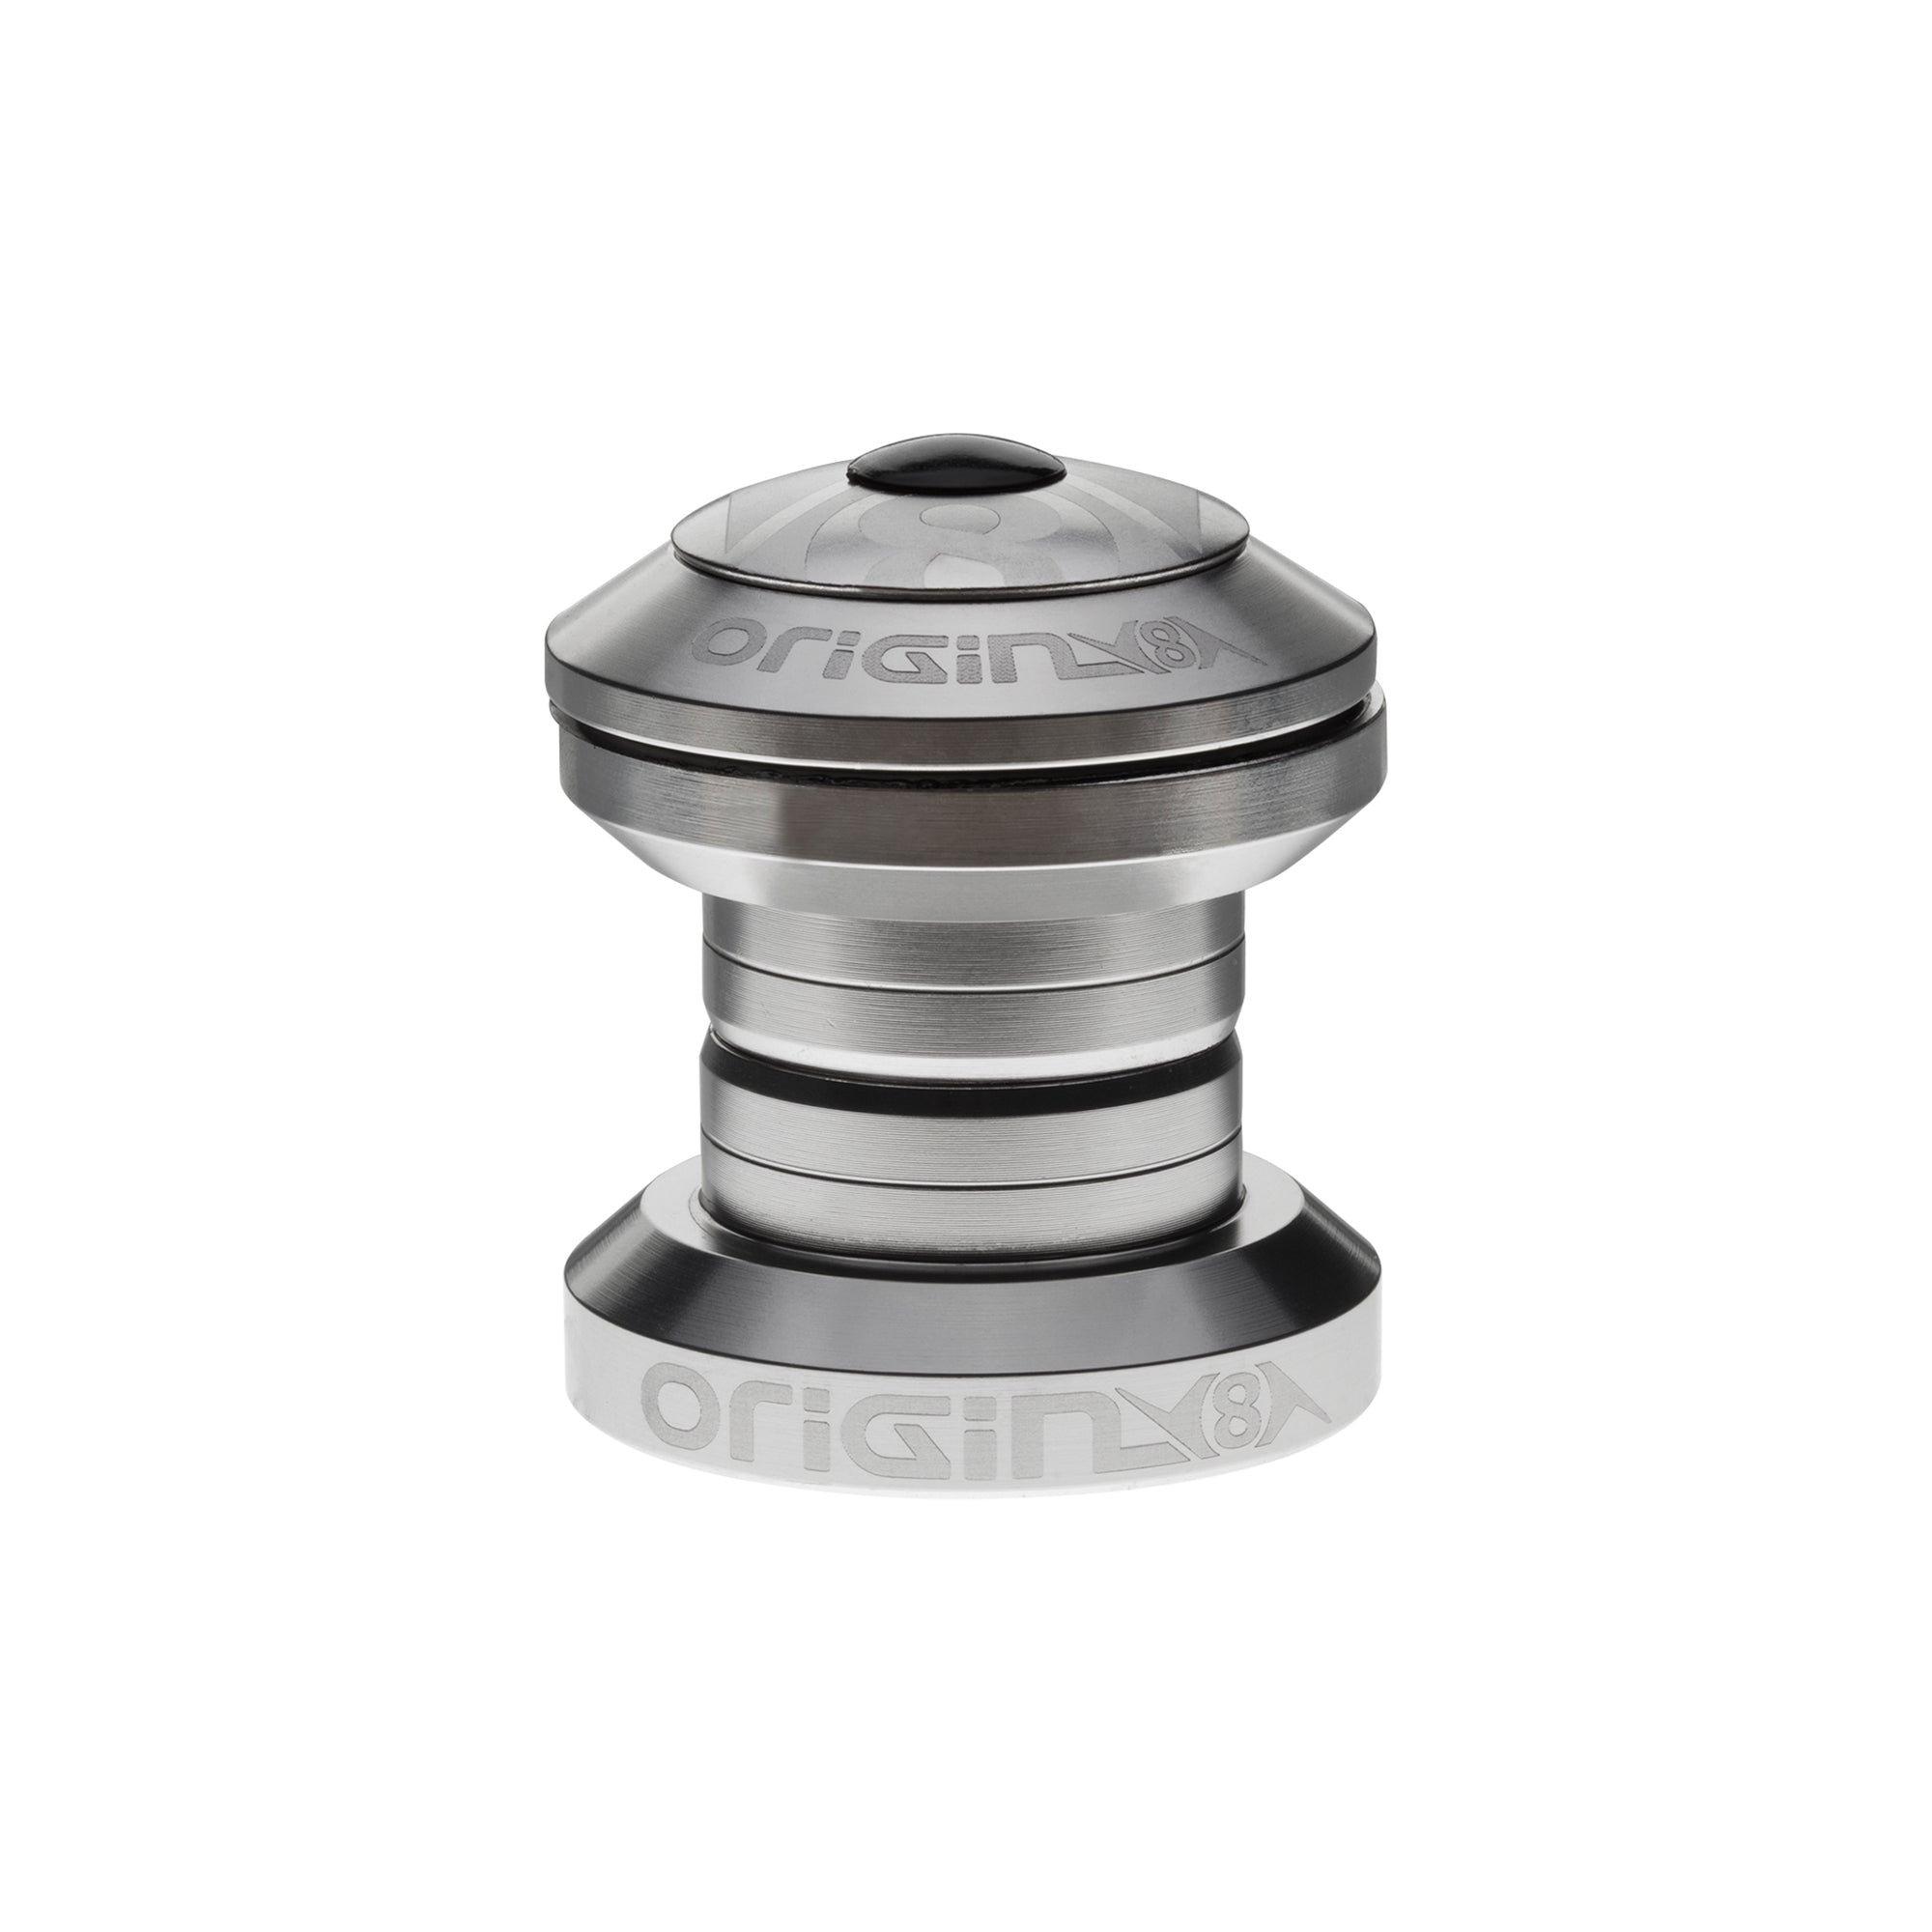 Origin8 Pro Fit 1" Sealed Threadless Headset w/ 26.4mm & 27.0mm race - Silver